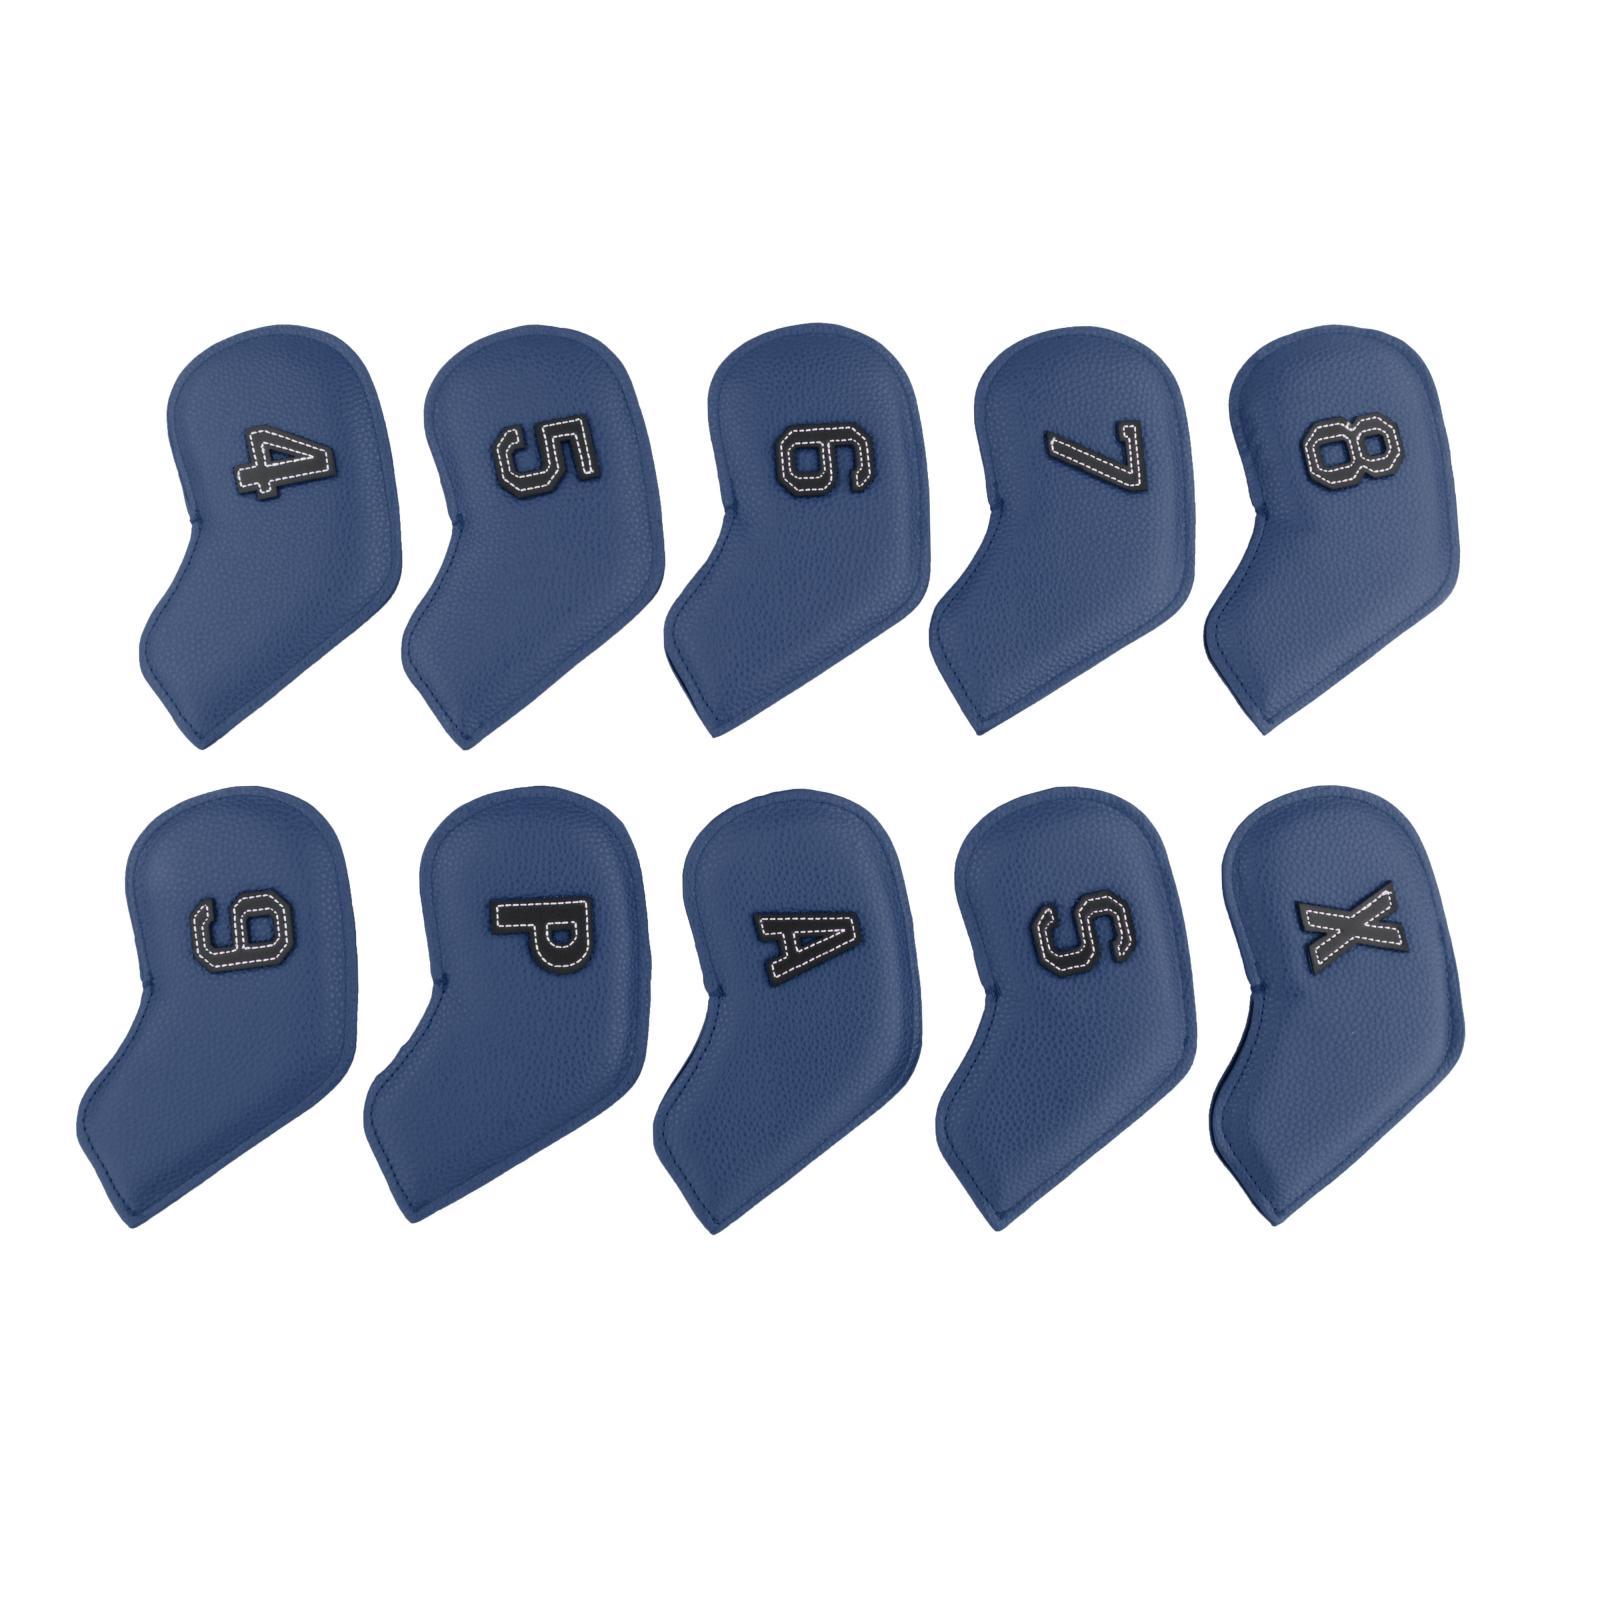 10Pcs Golf Iron Headcover, 4,5,6,7,8,9,A,S,P,X Fits All Brands Dark Blue 